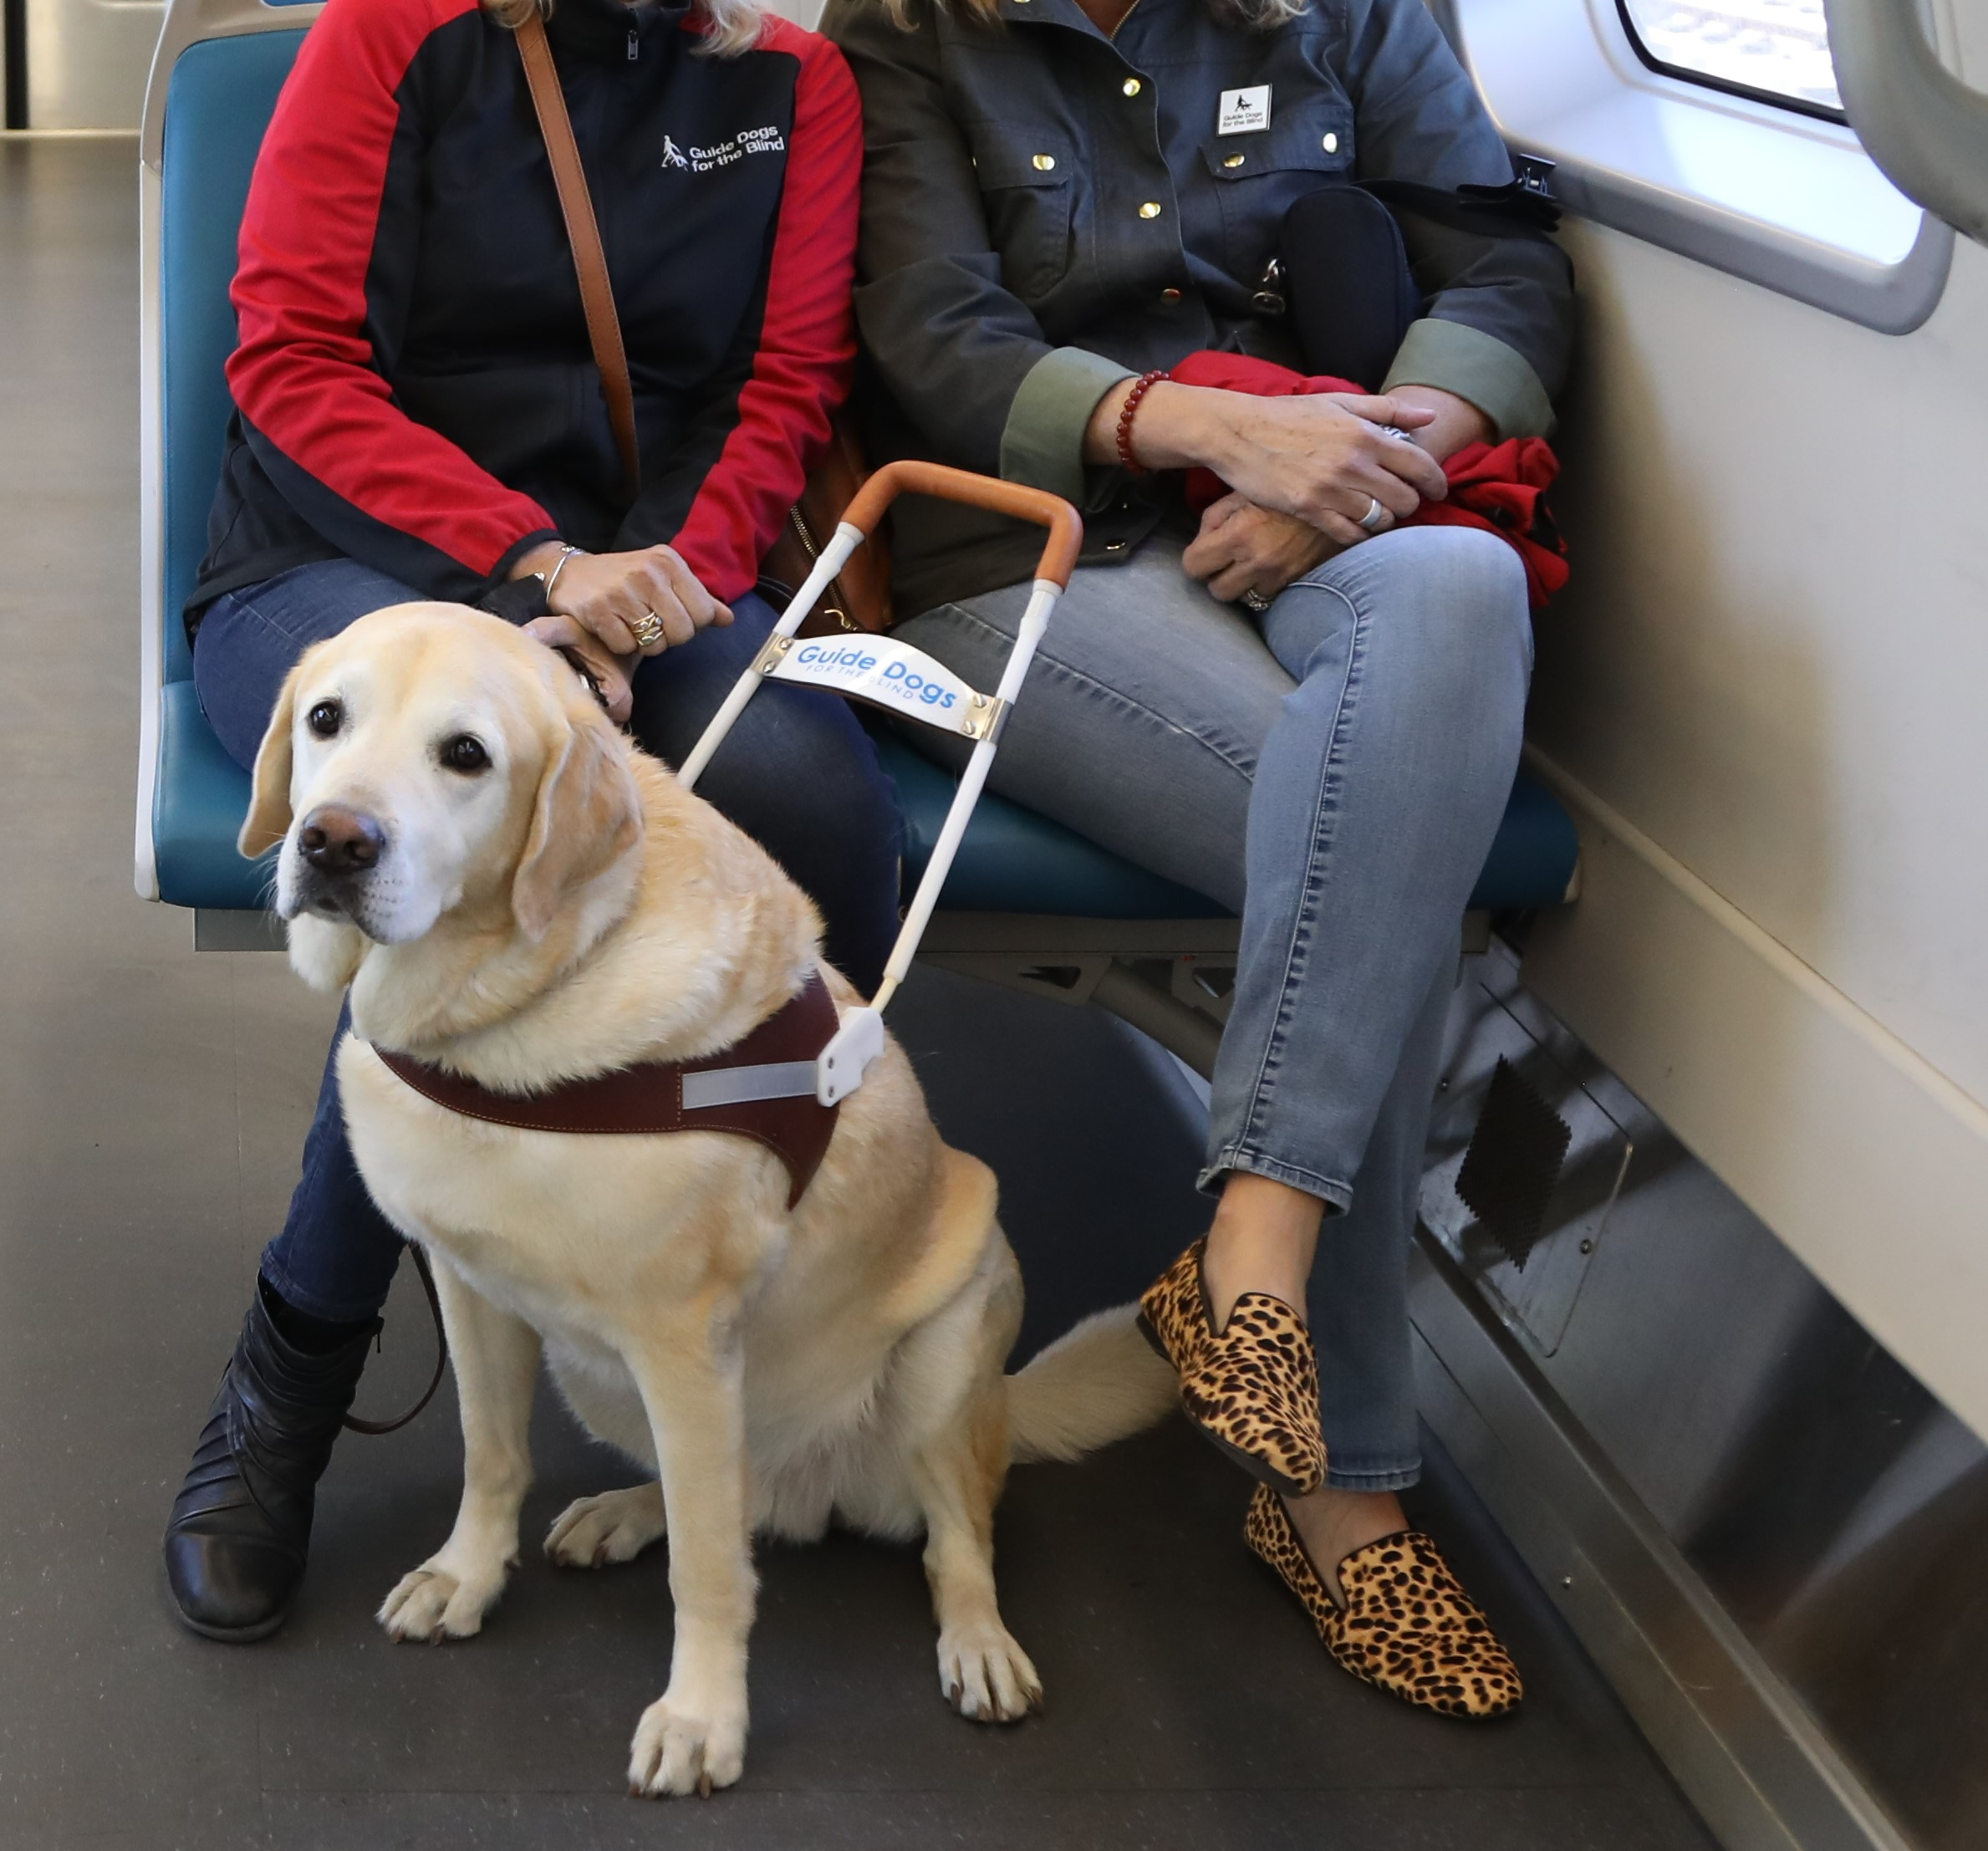 A service dog on a train